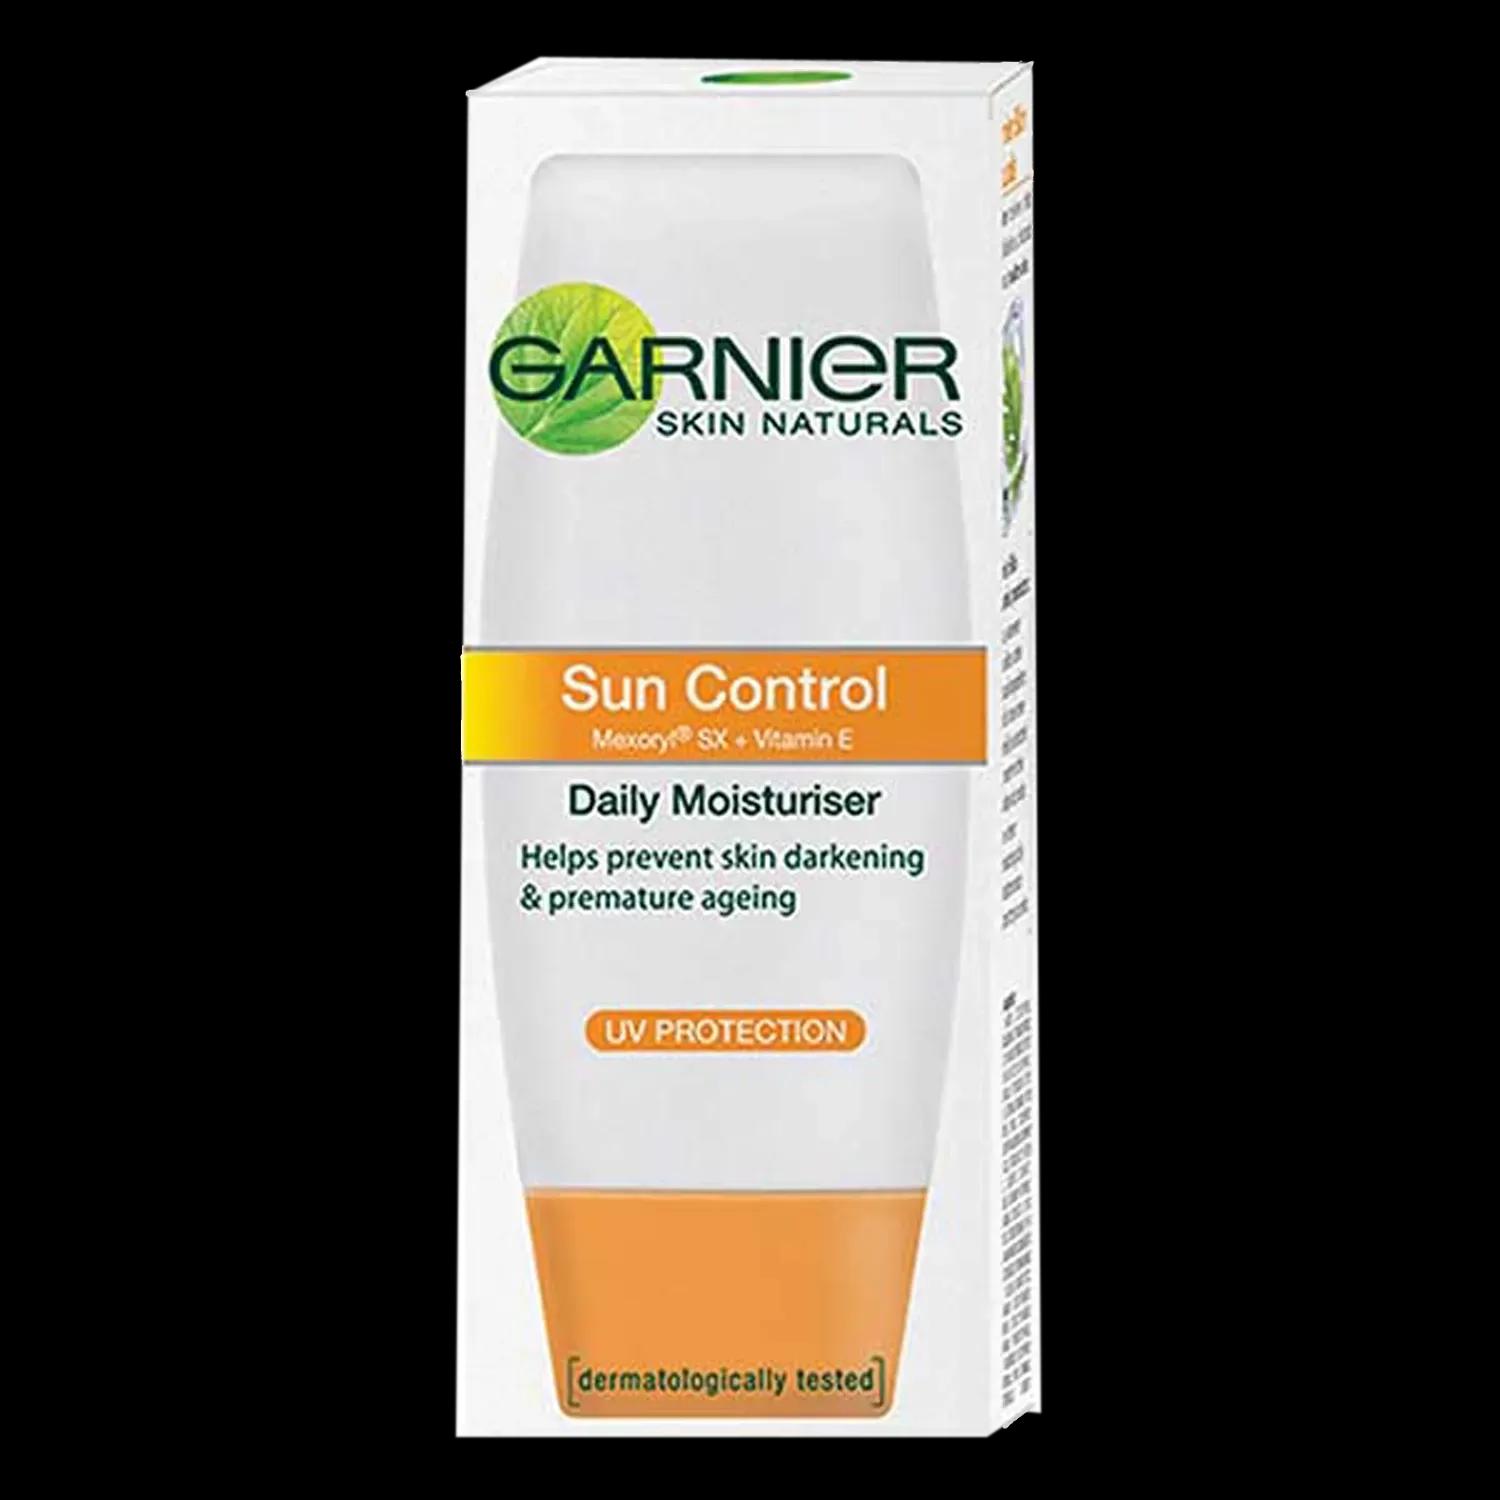 Garnier Skin Naturals Sun Control Daily Moisturiser SPF 15 (50ml)